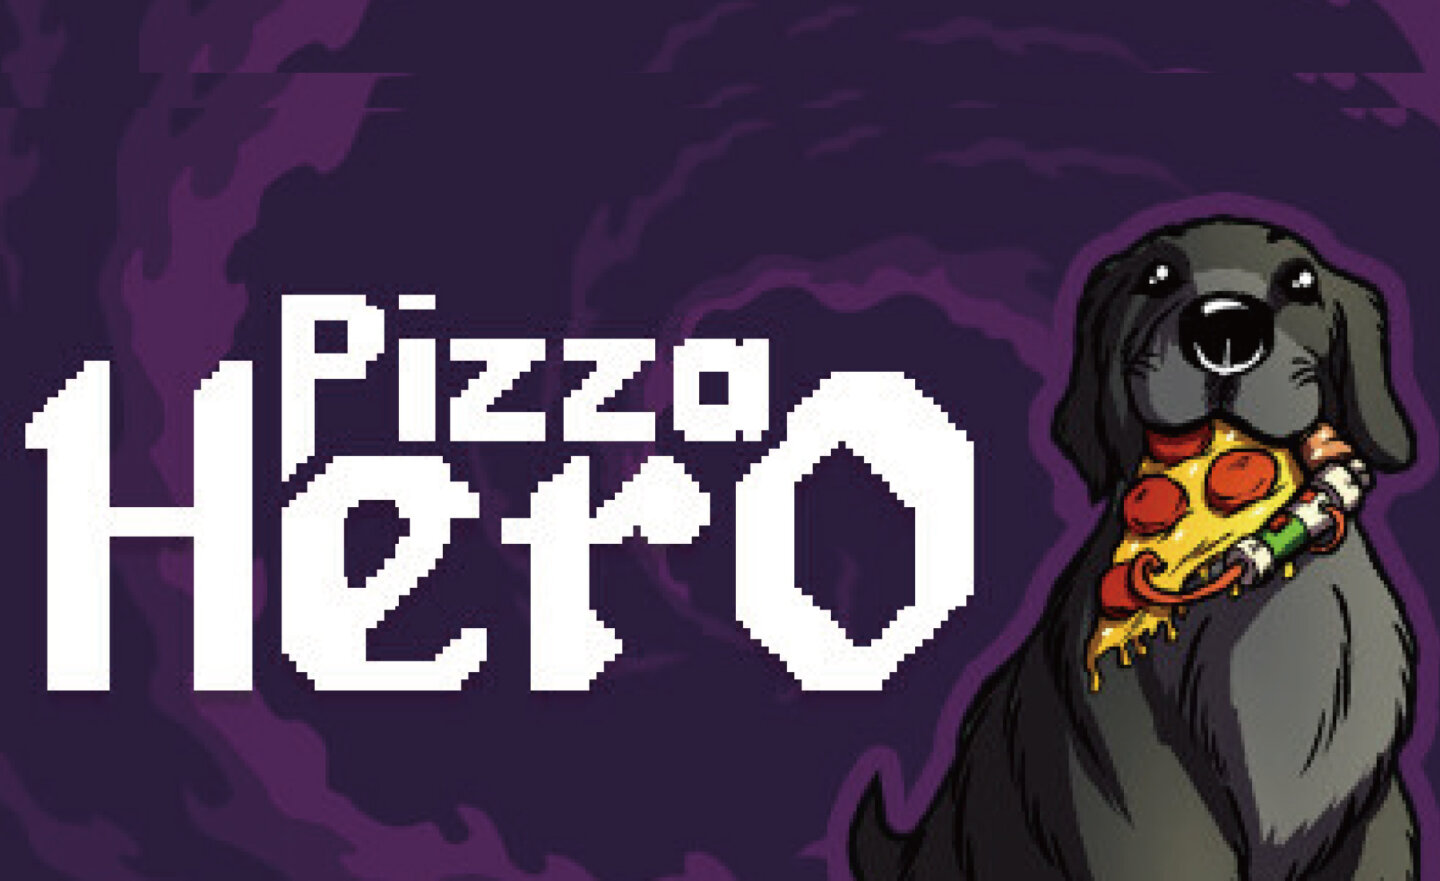 【限時免費】Steam 放送 Rougelike 射擊遊戲《Pizza Hero》 ，點擊下載永久保留